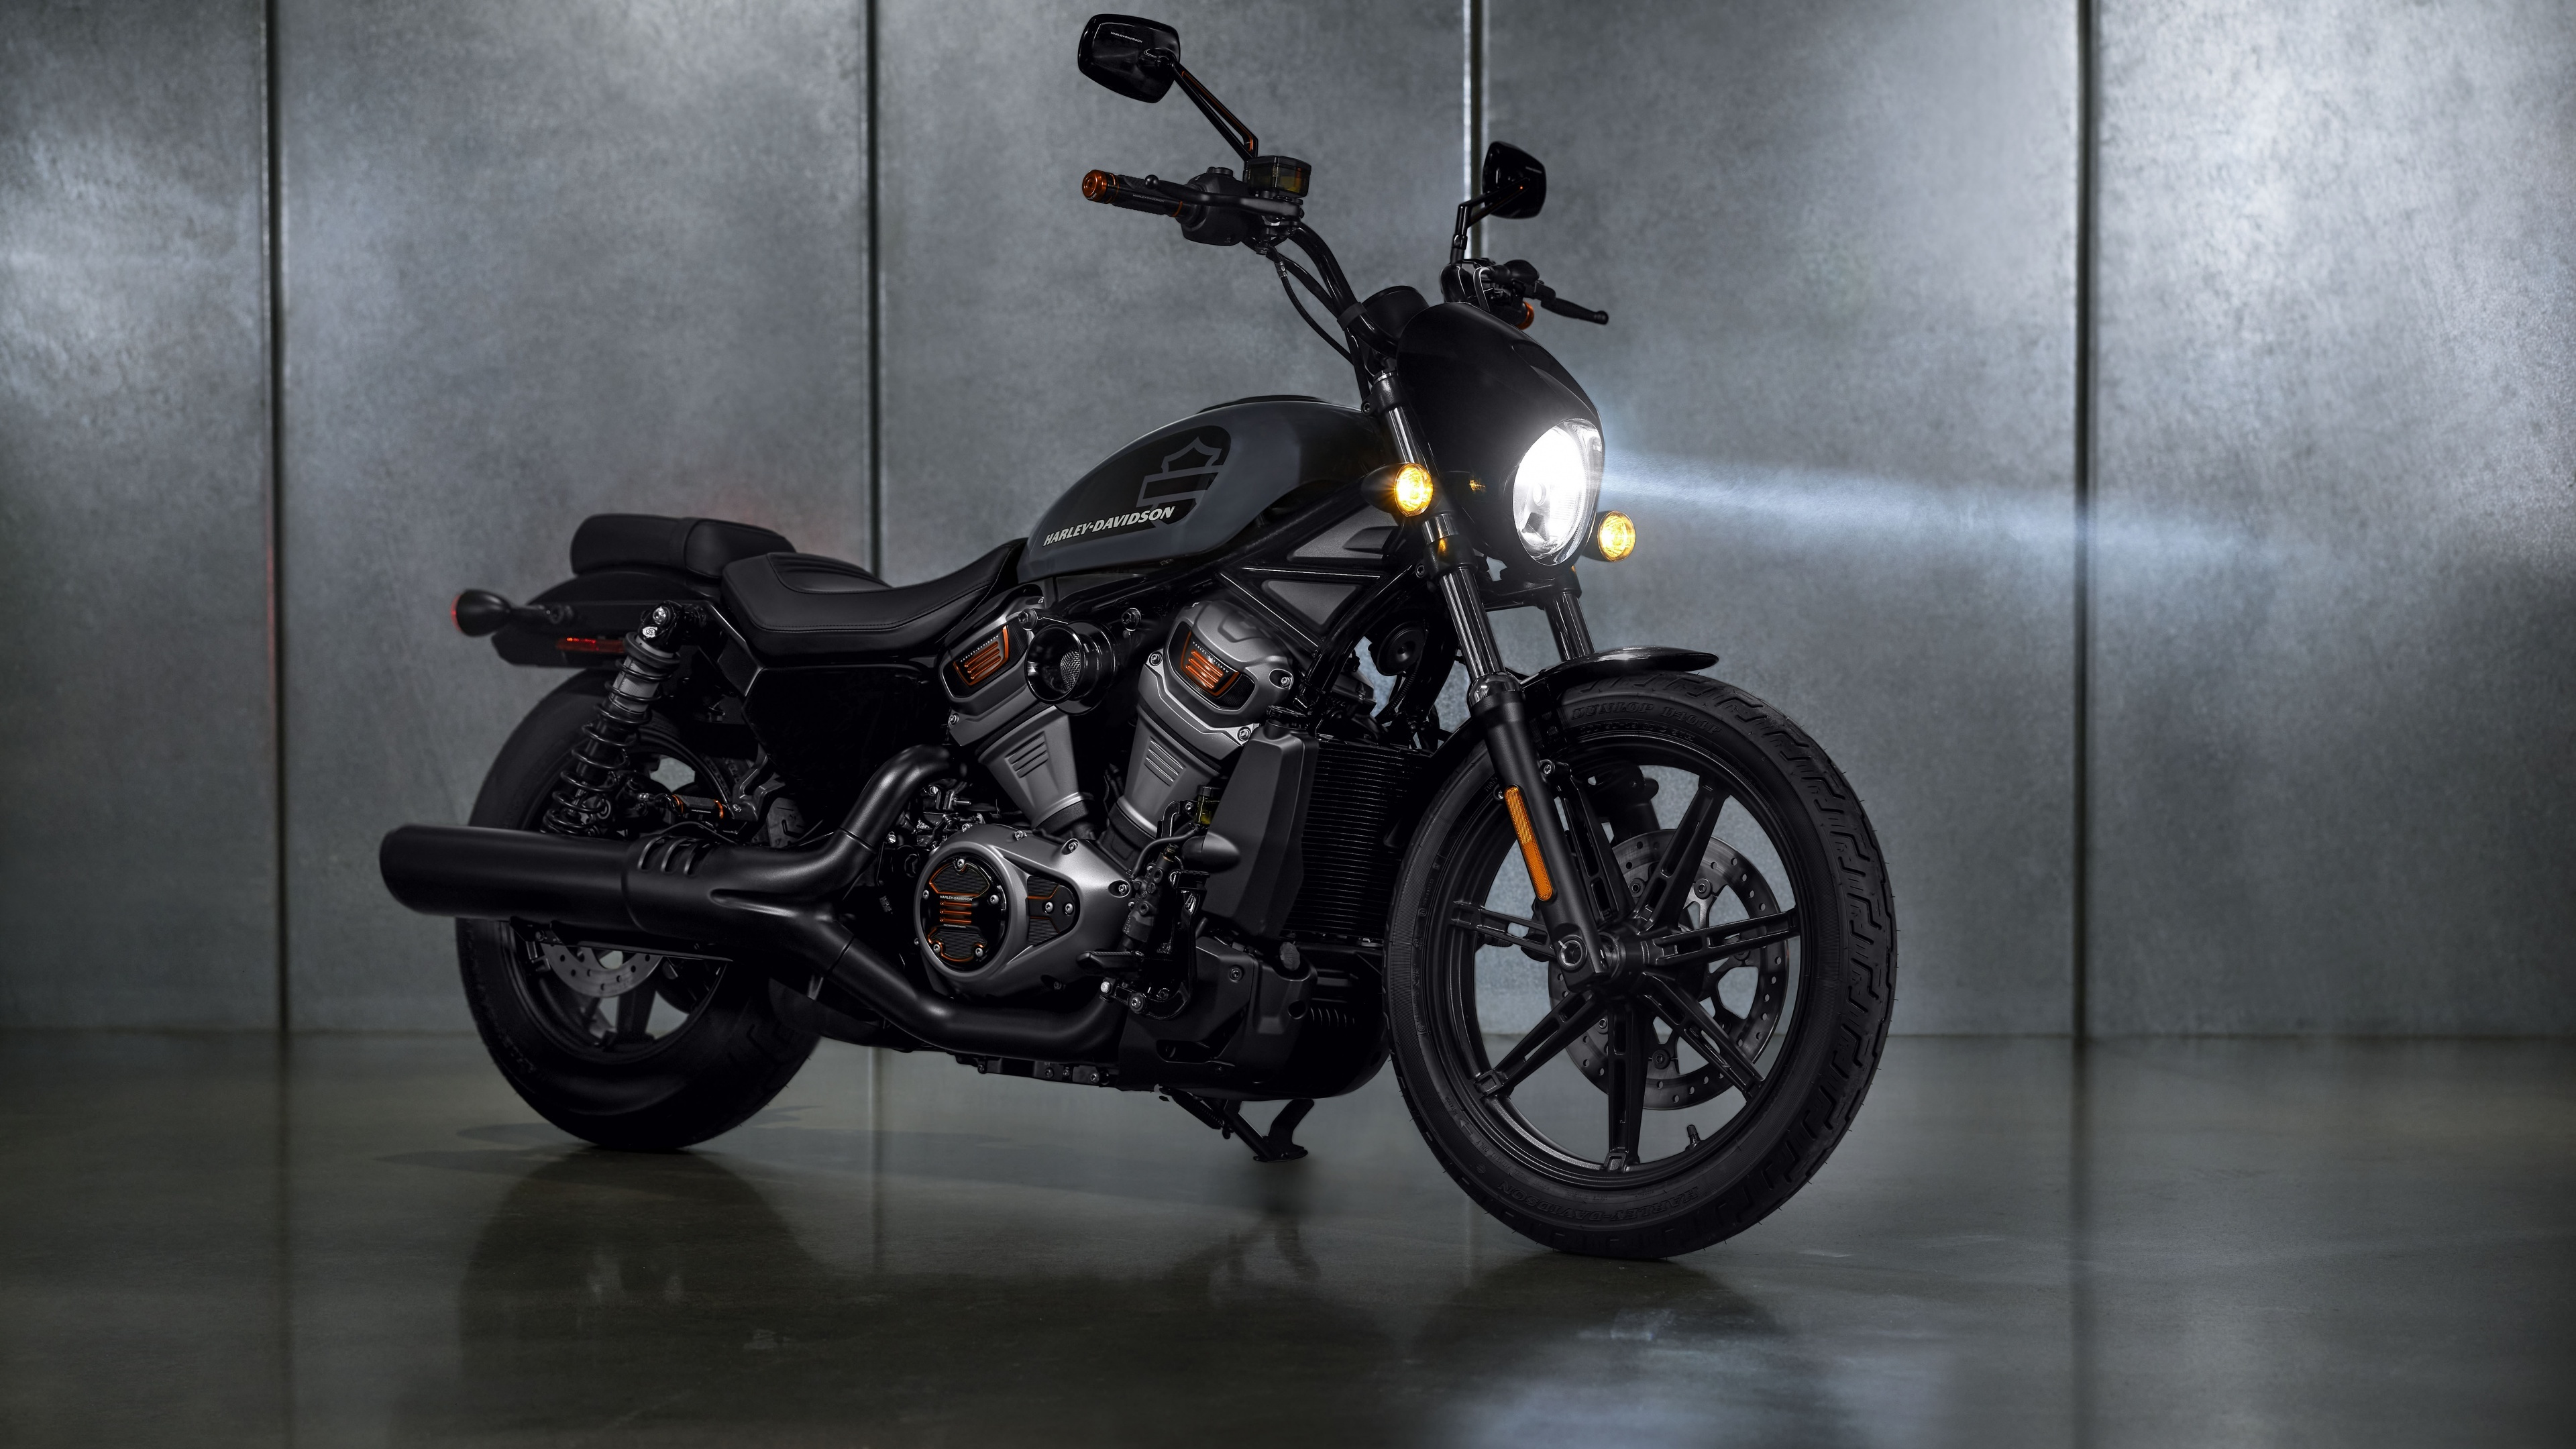 Harley-Davidson Nightster Auto, Cruiser motorcycle, Powerful engine, Show-stopping looks, 3840x2160 4K Desktop